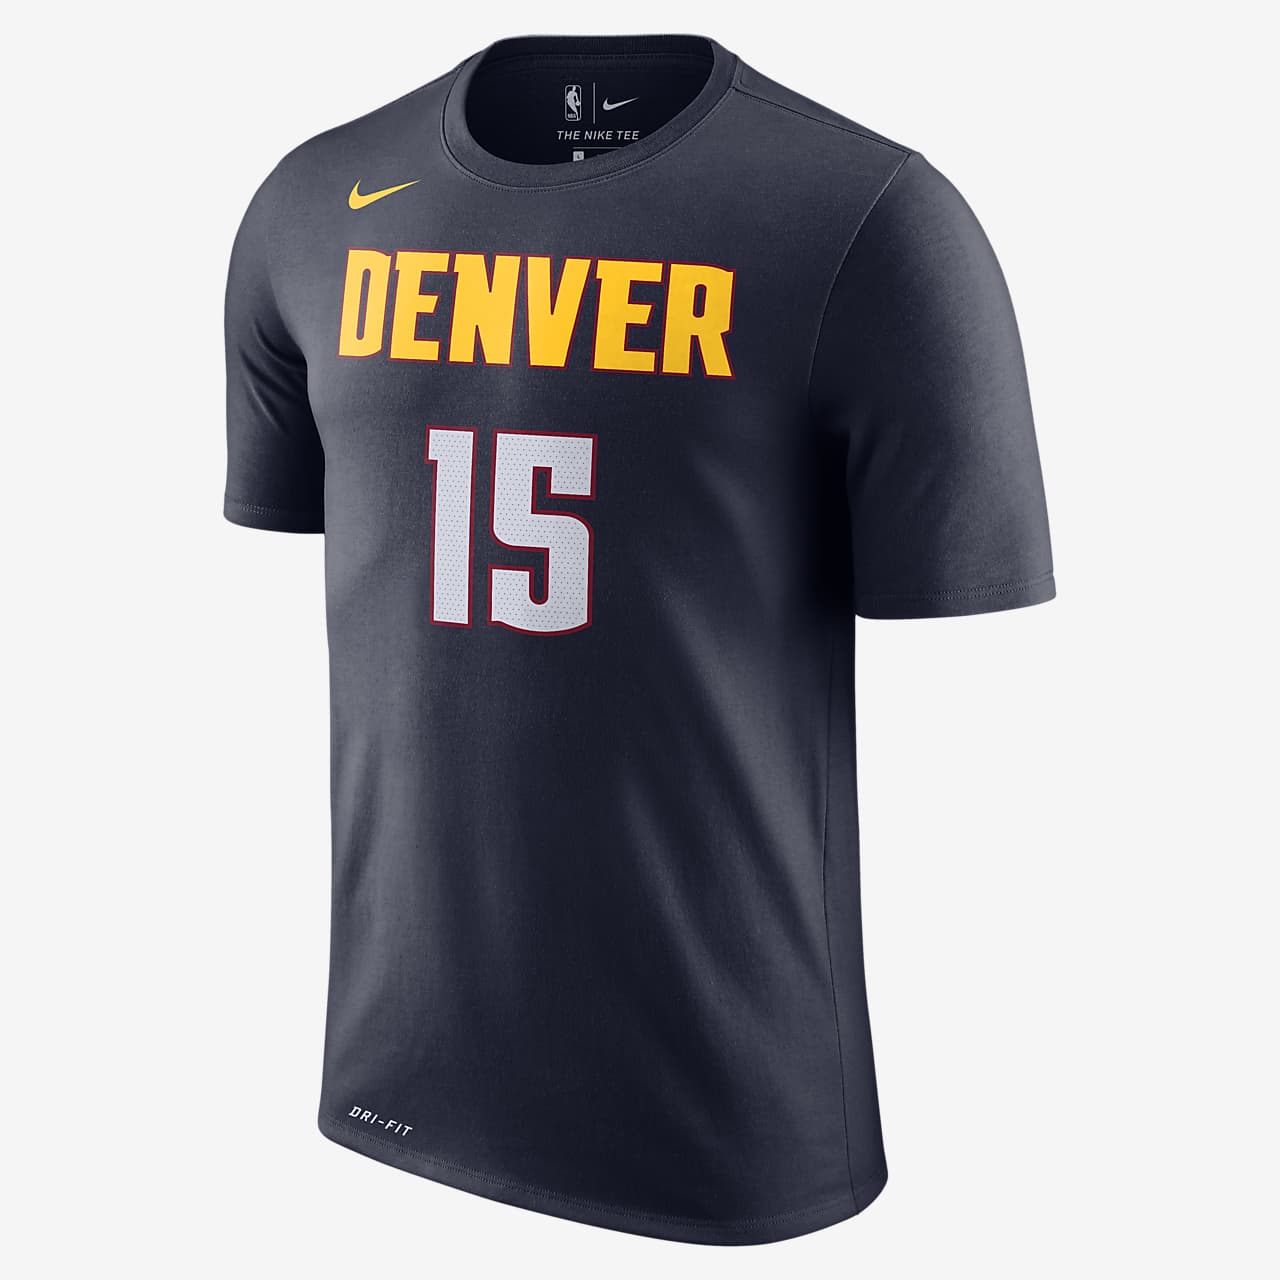 Denver Nuggets Men's Nike Dri-FIT NBA T-Shirt